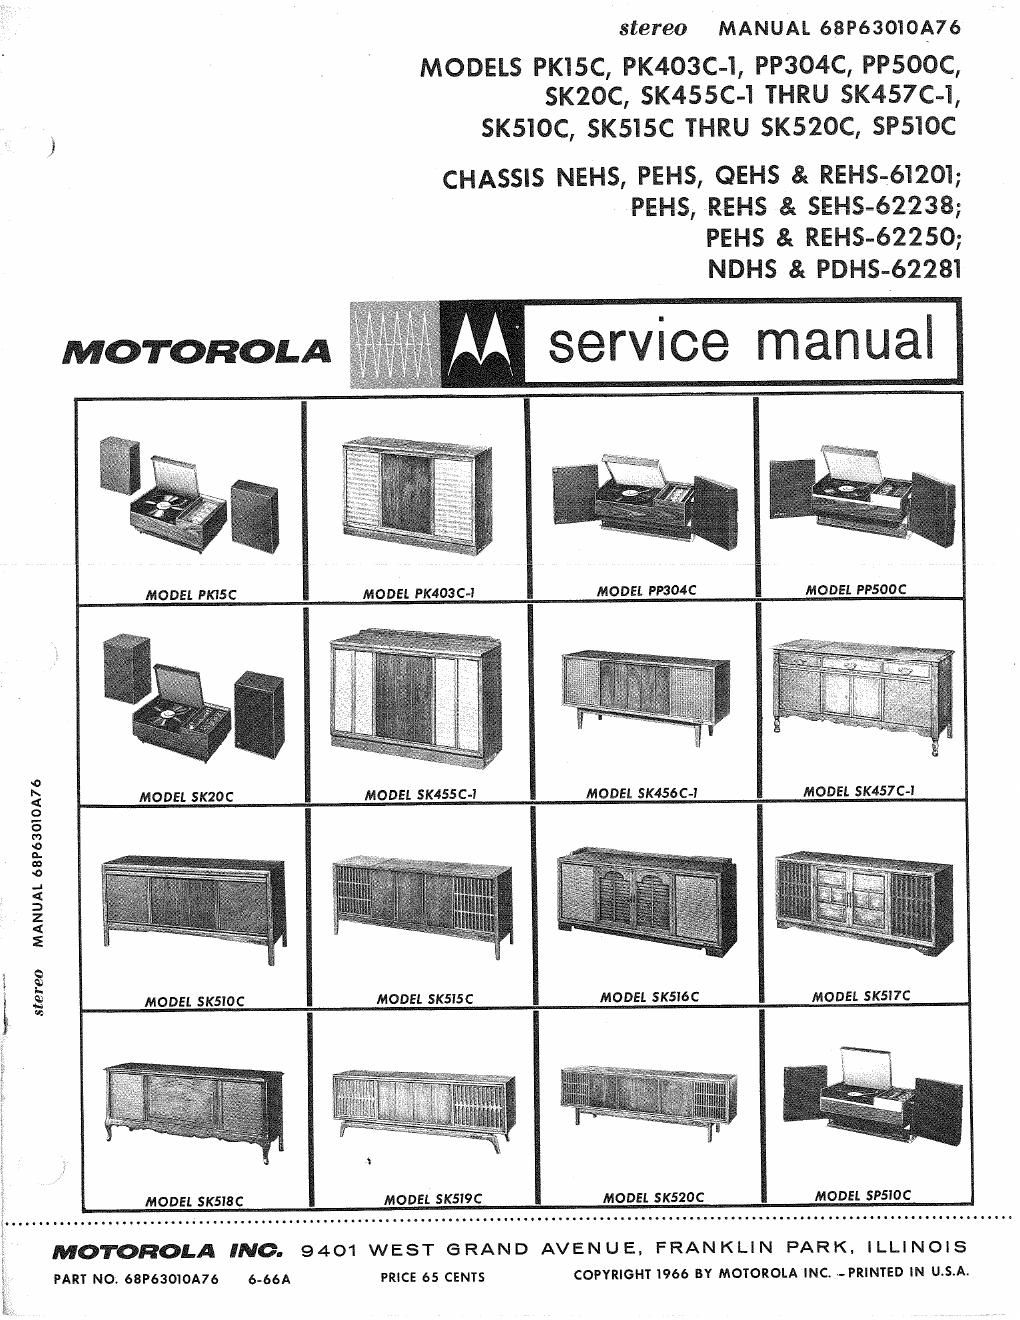 motorola sk 456 c 1 service manual